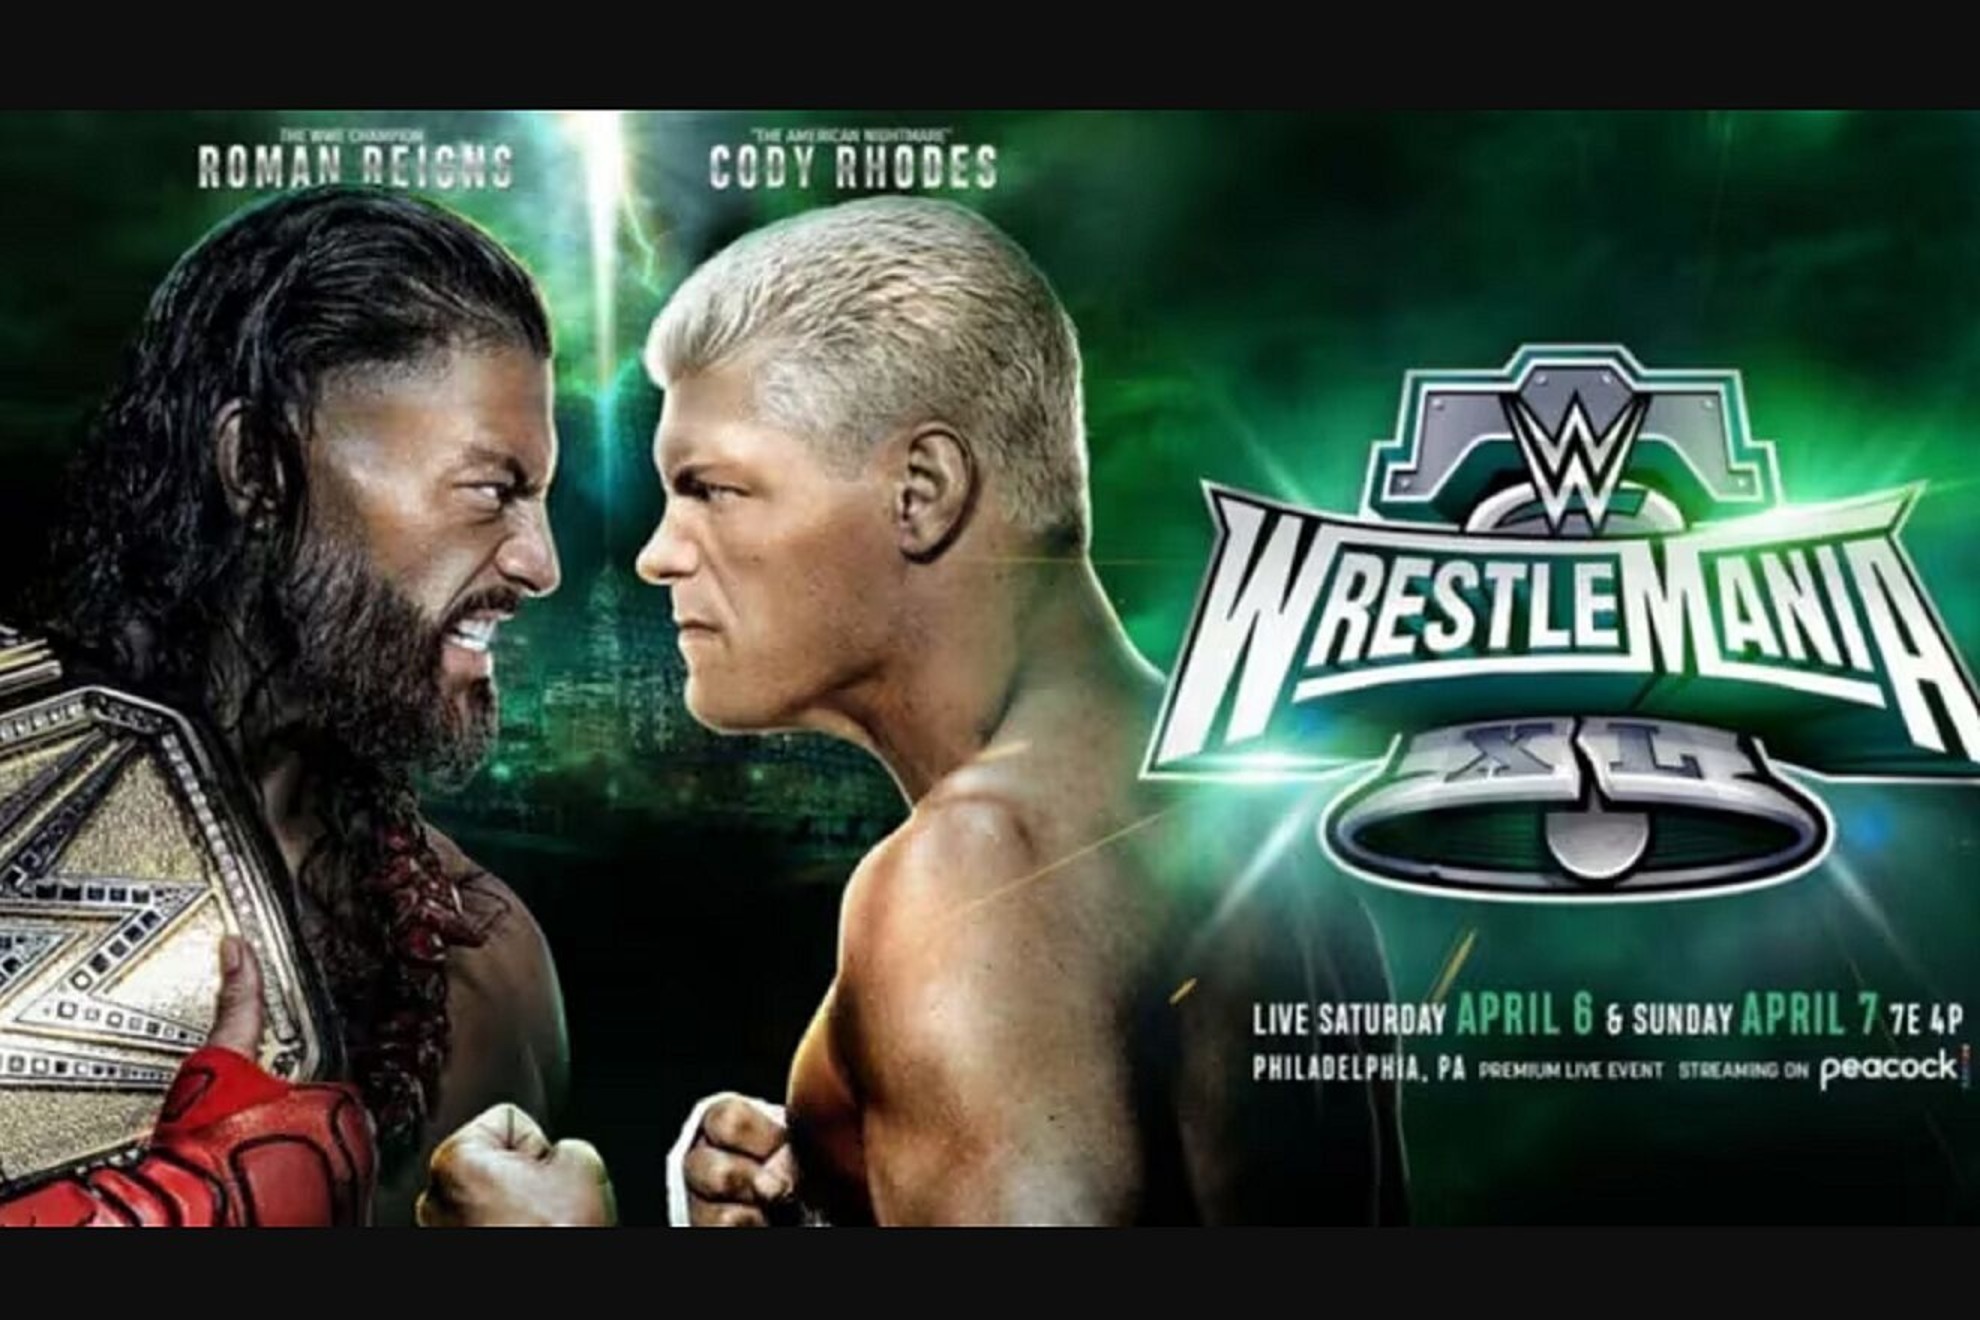 WrestleMania XL will be held April 6-7 in Philadelphia.